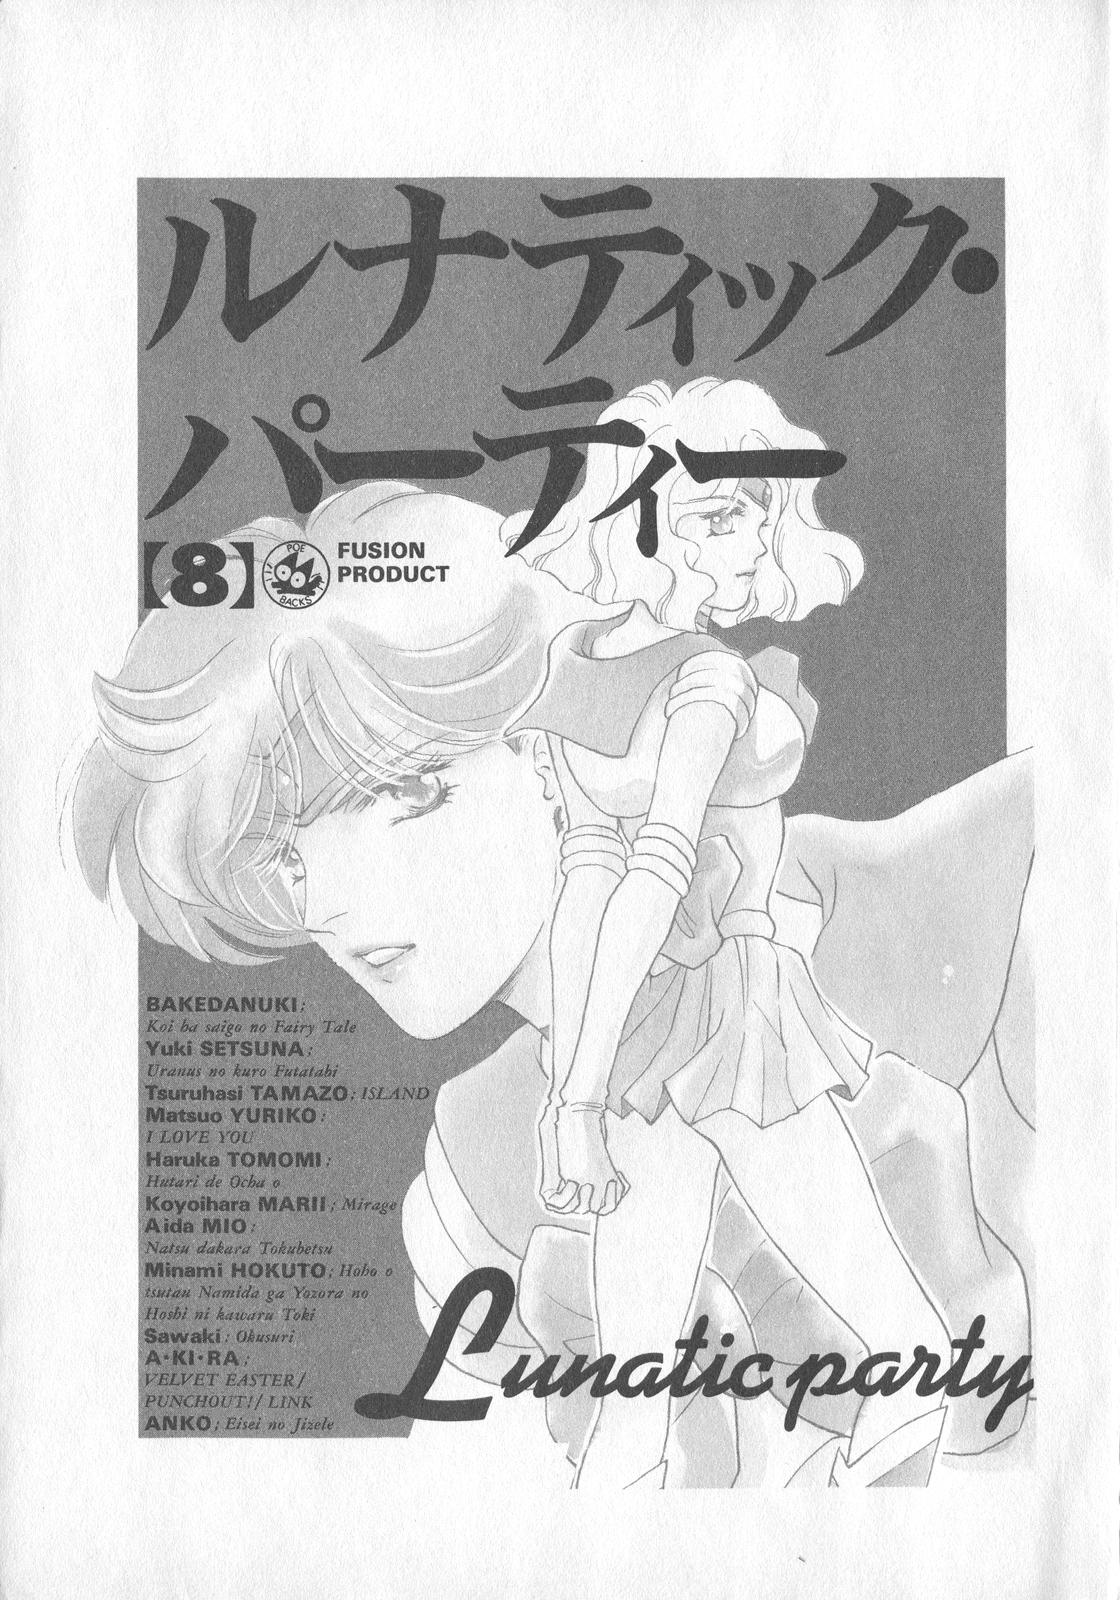 Ebony Lunatic Party 8 - Sailor moon Oil - Page 2